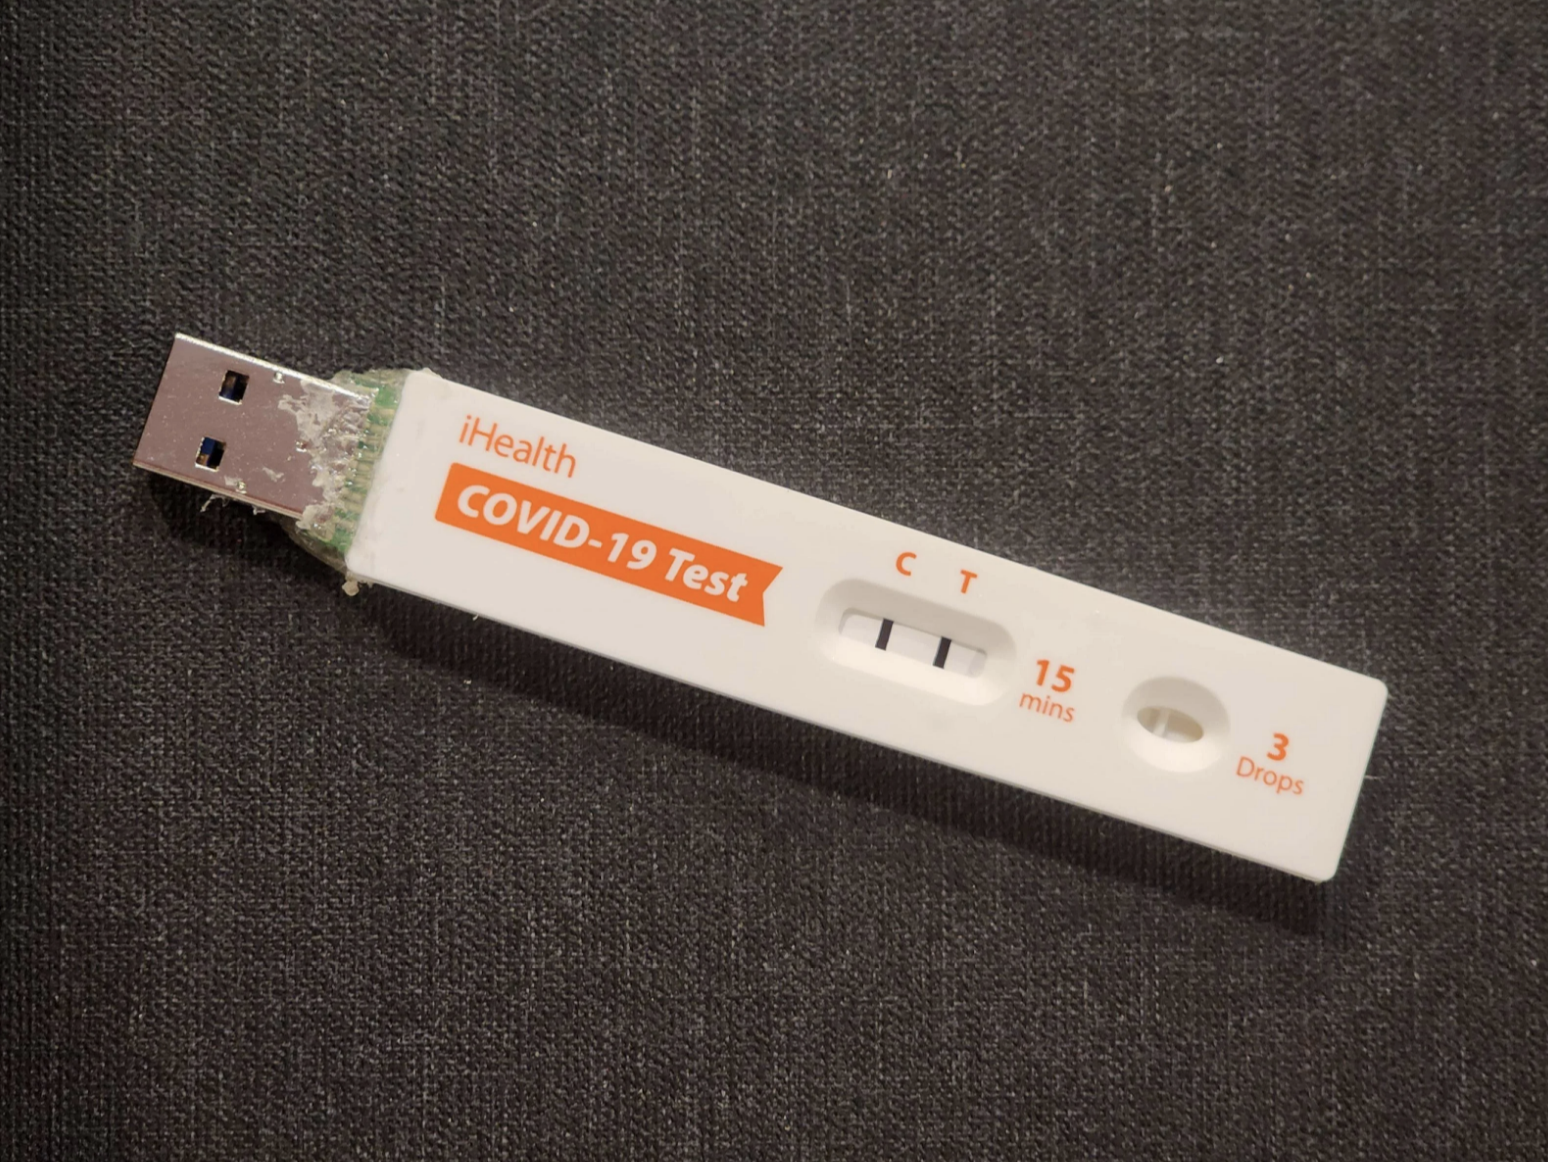 A COVID test USB